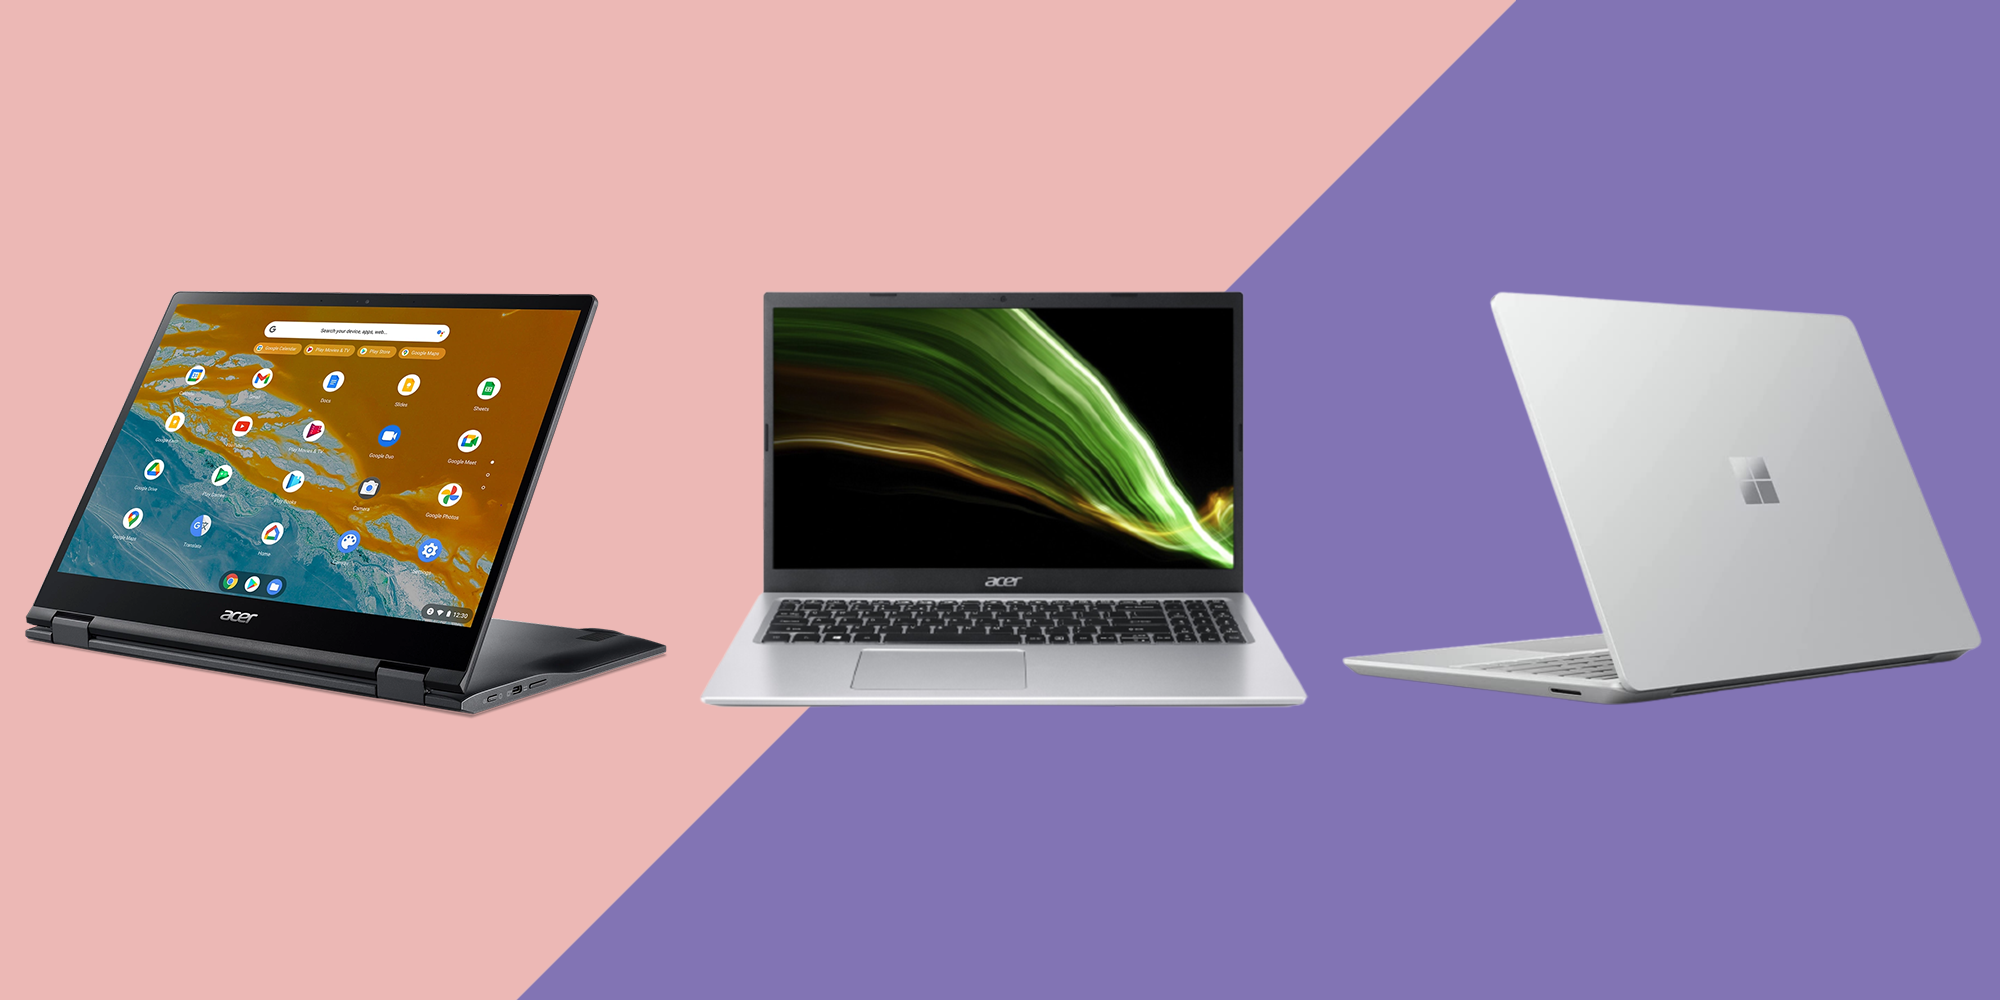 The best laptops under $200